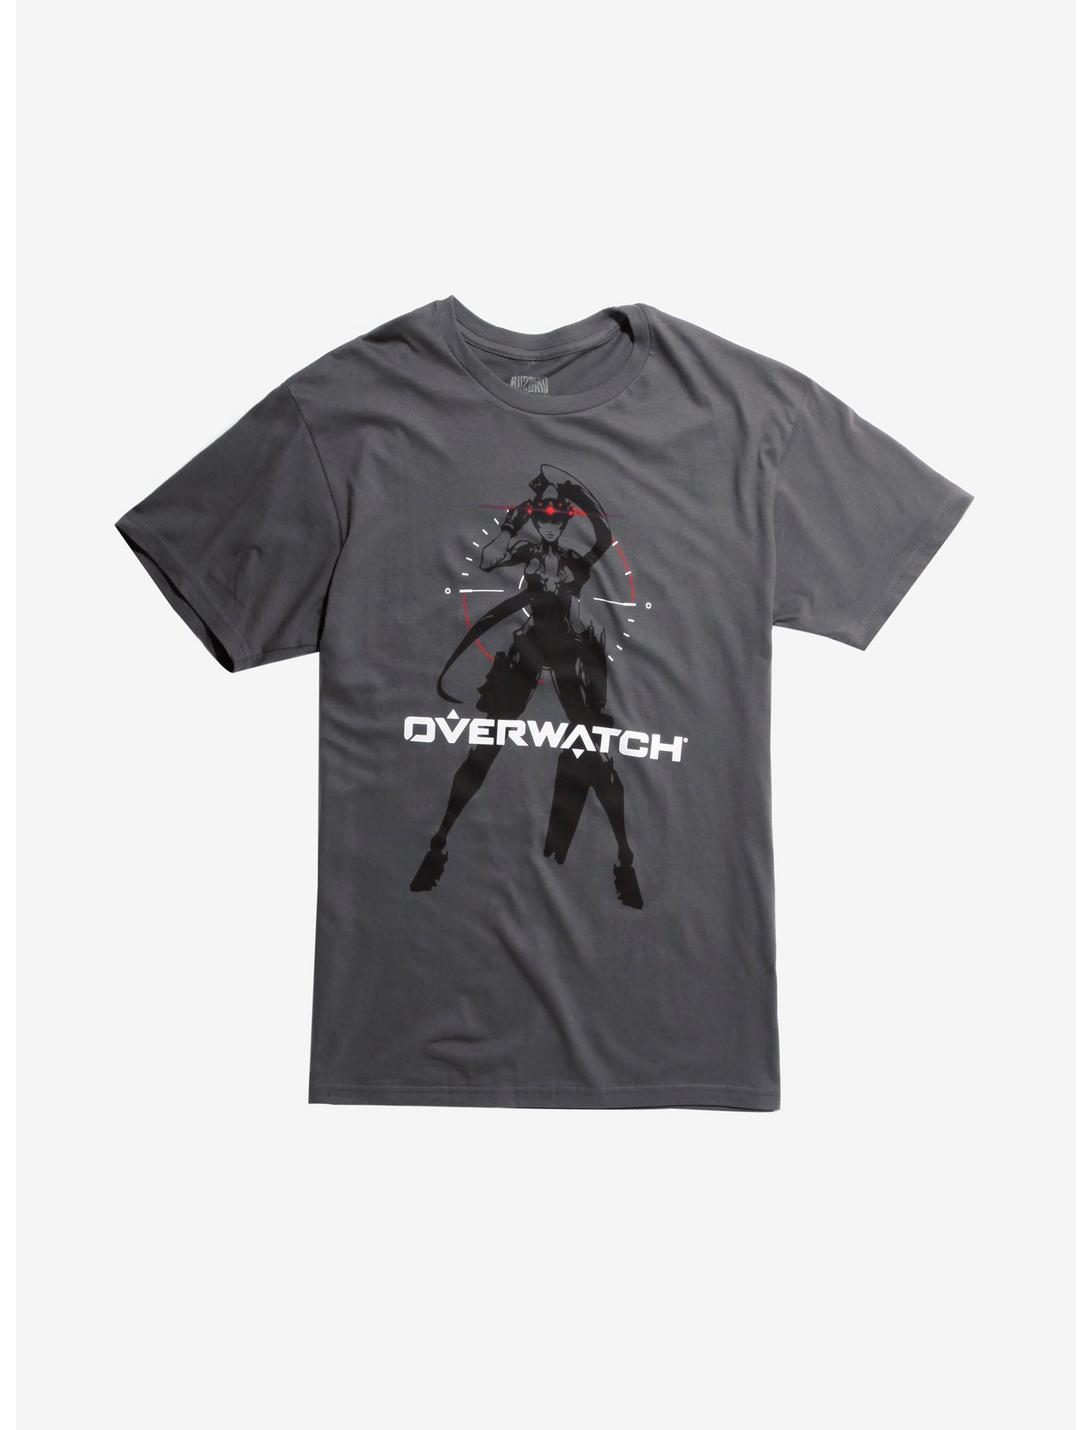 Overwatch Living Weapon Widowmaker T-Shirt, GREY, hi-res